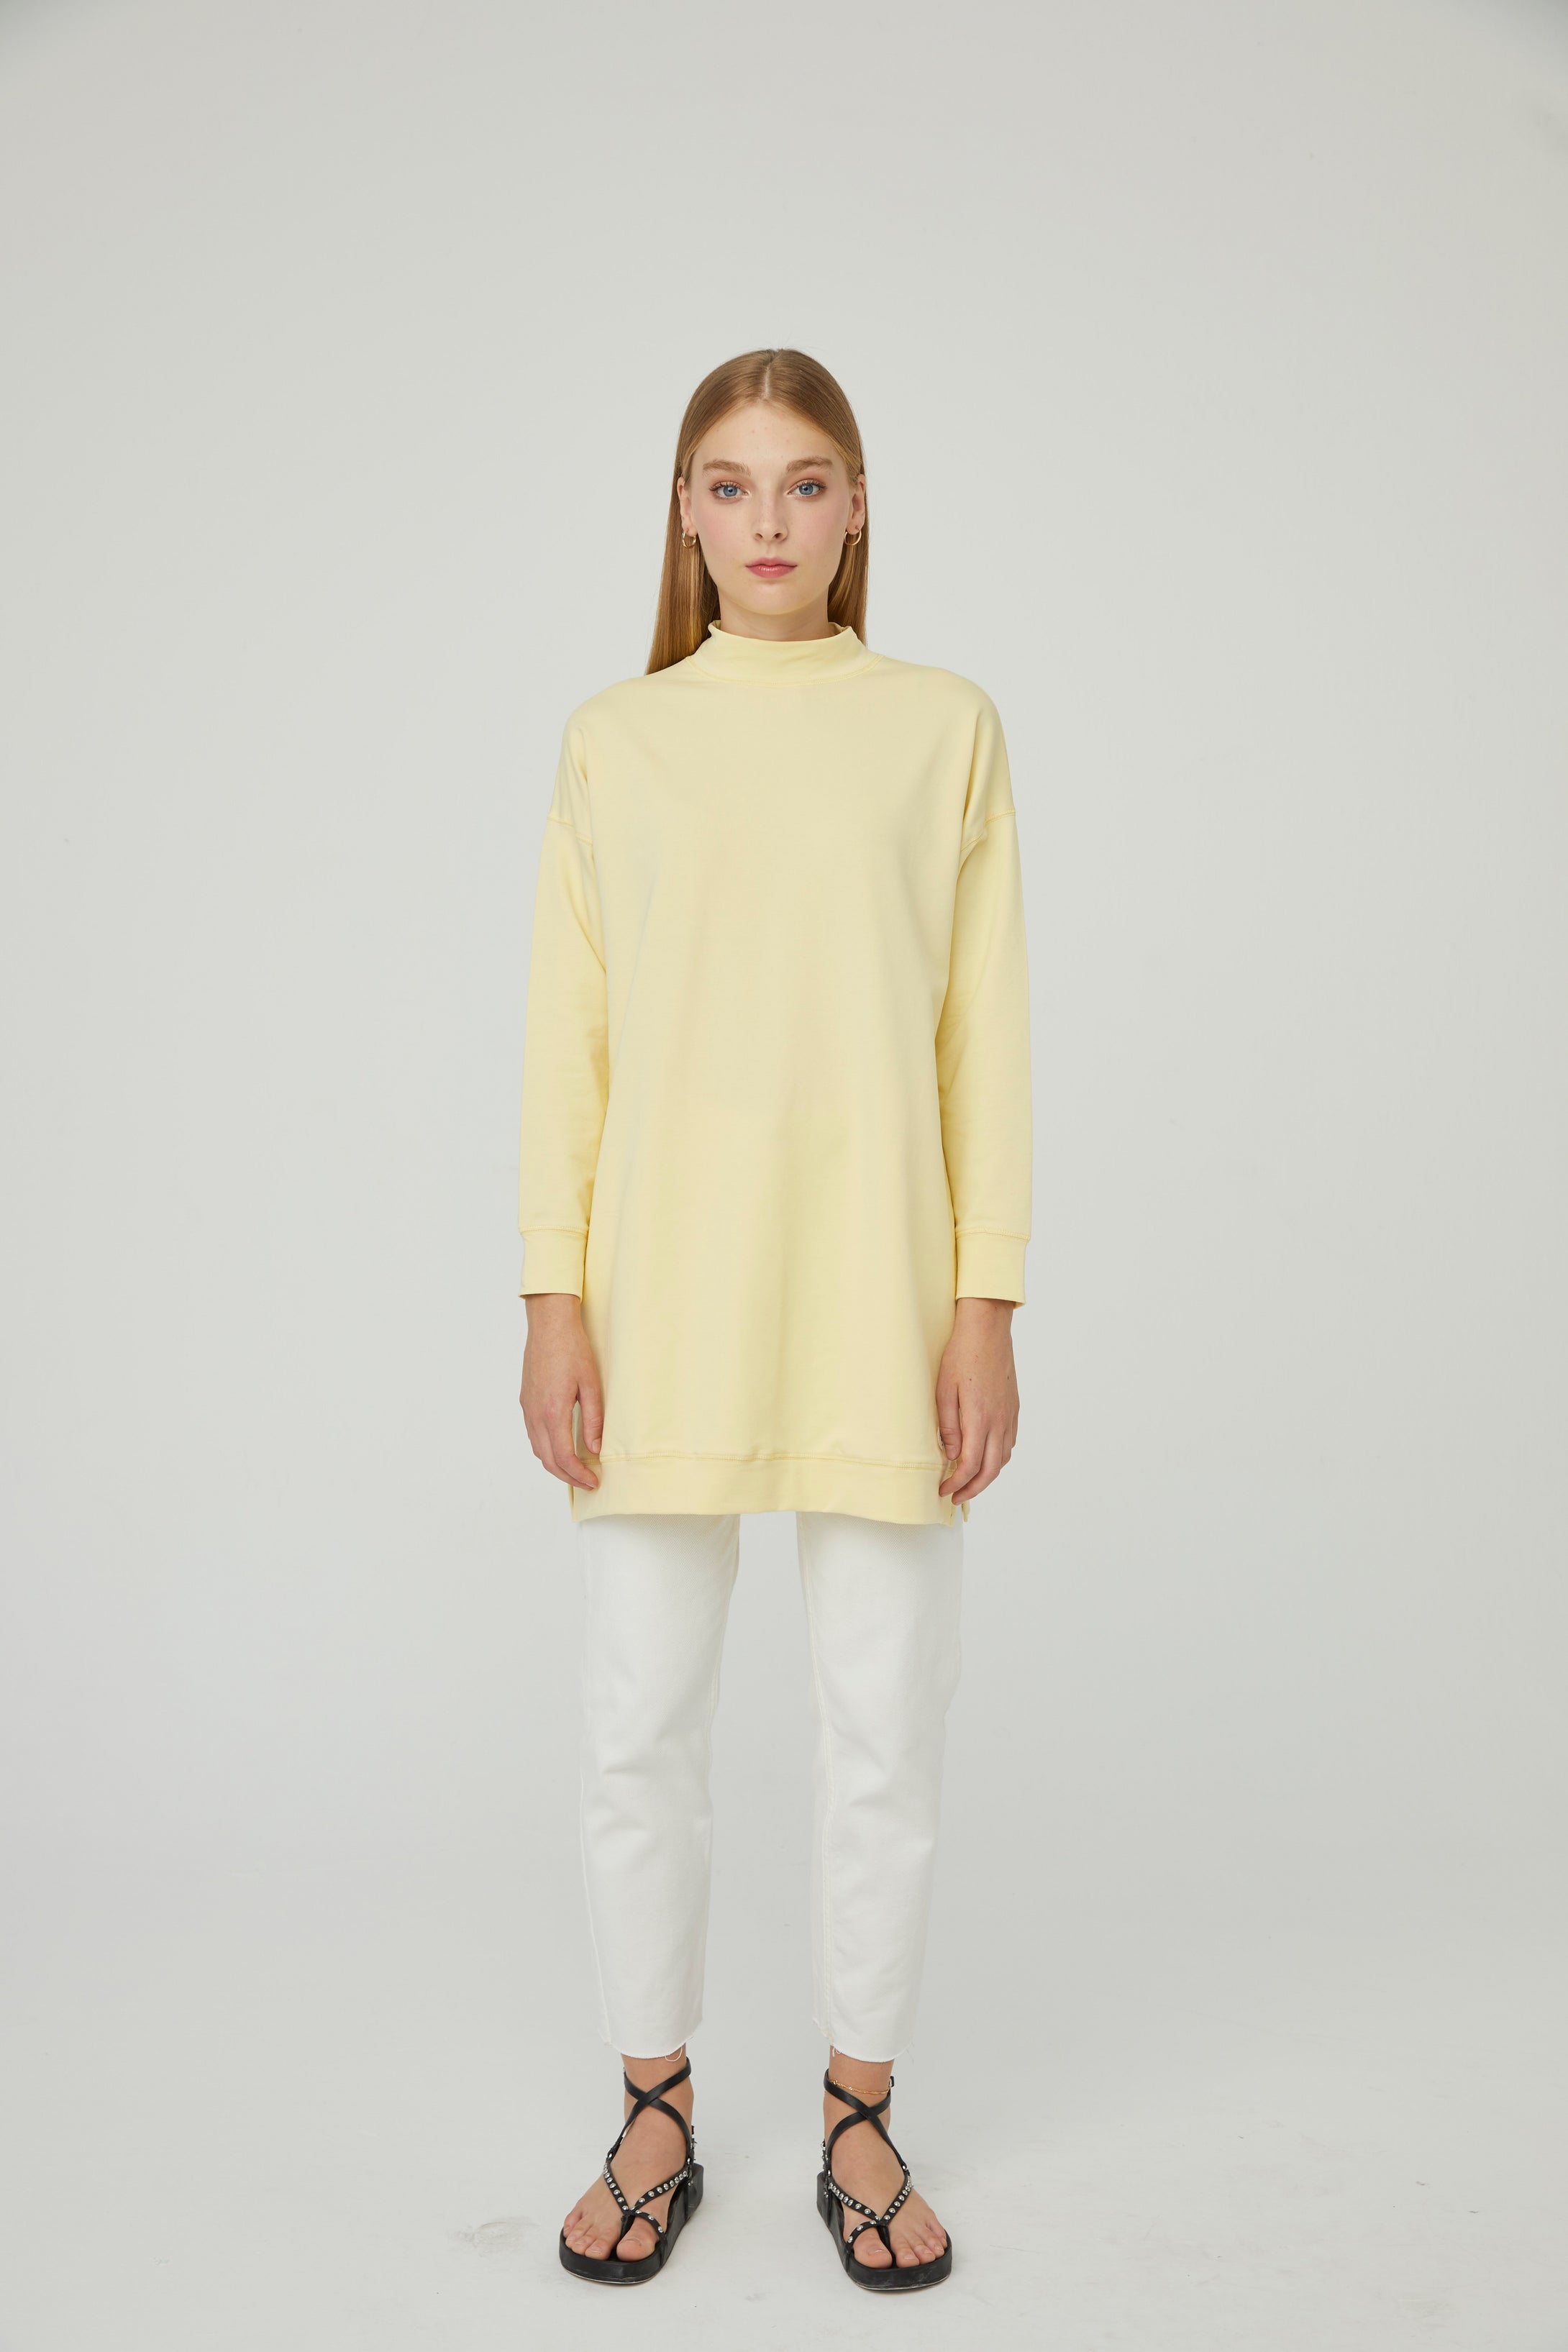 Sweatshirt Barbara-yellow 100% cotton🌿